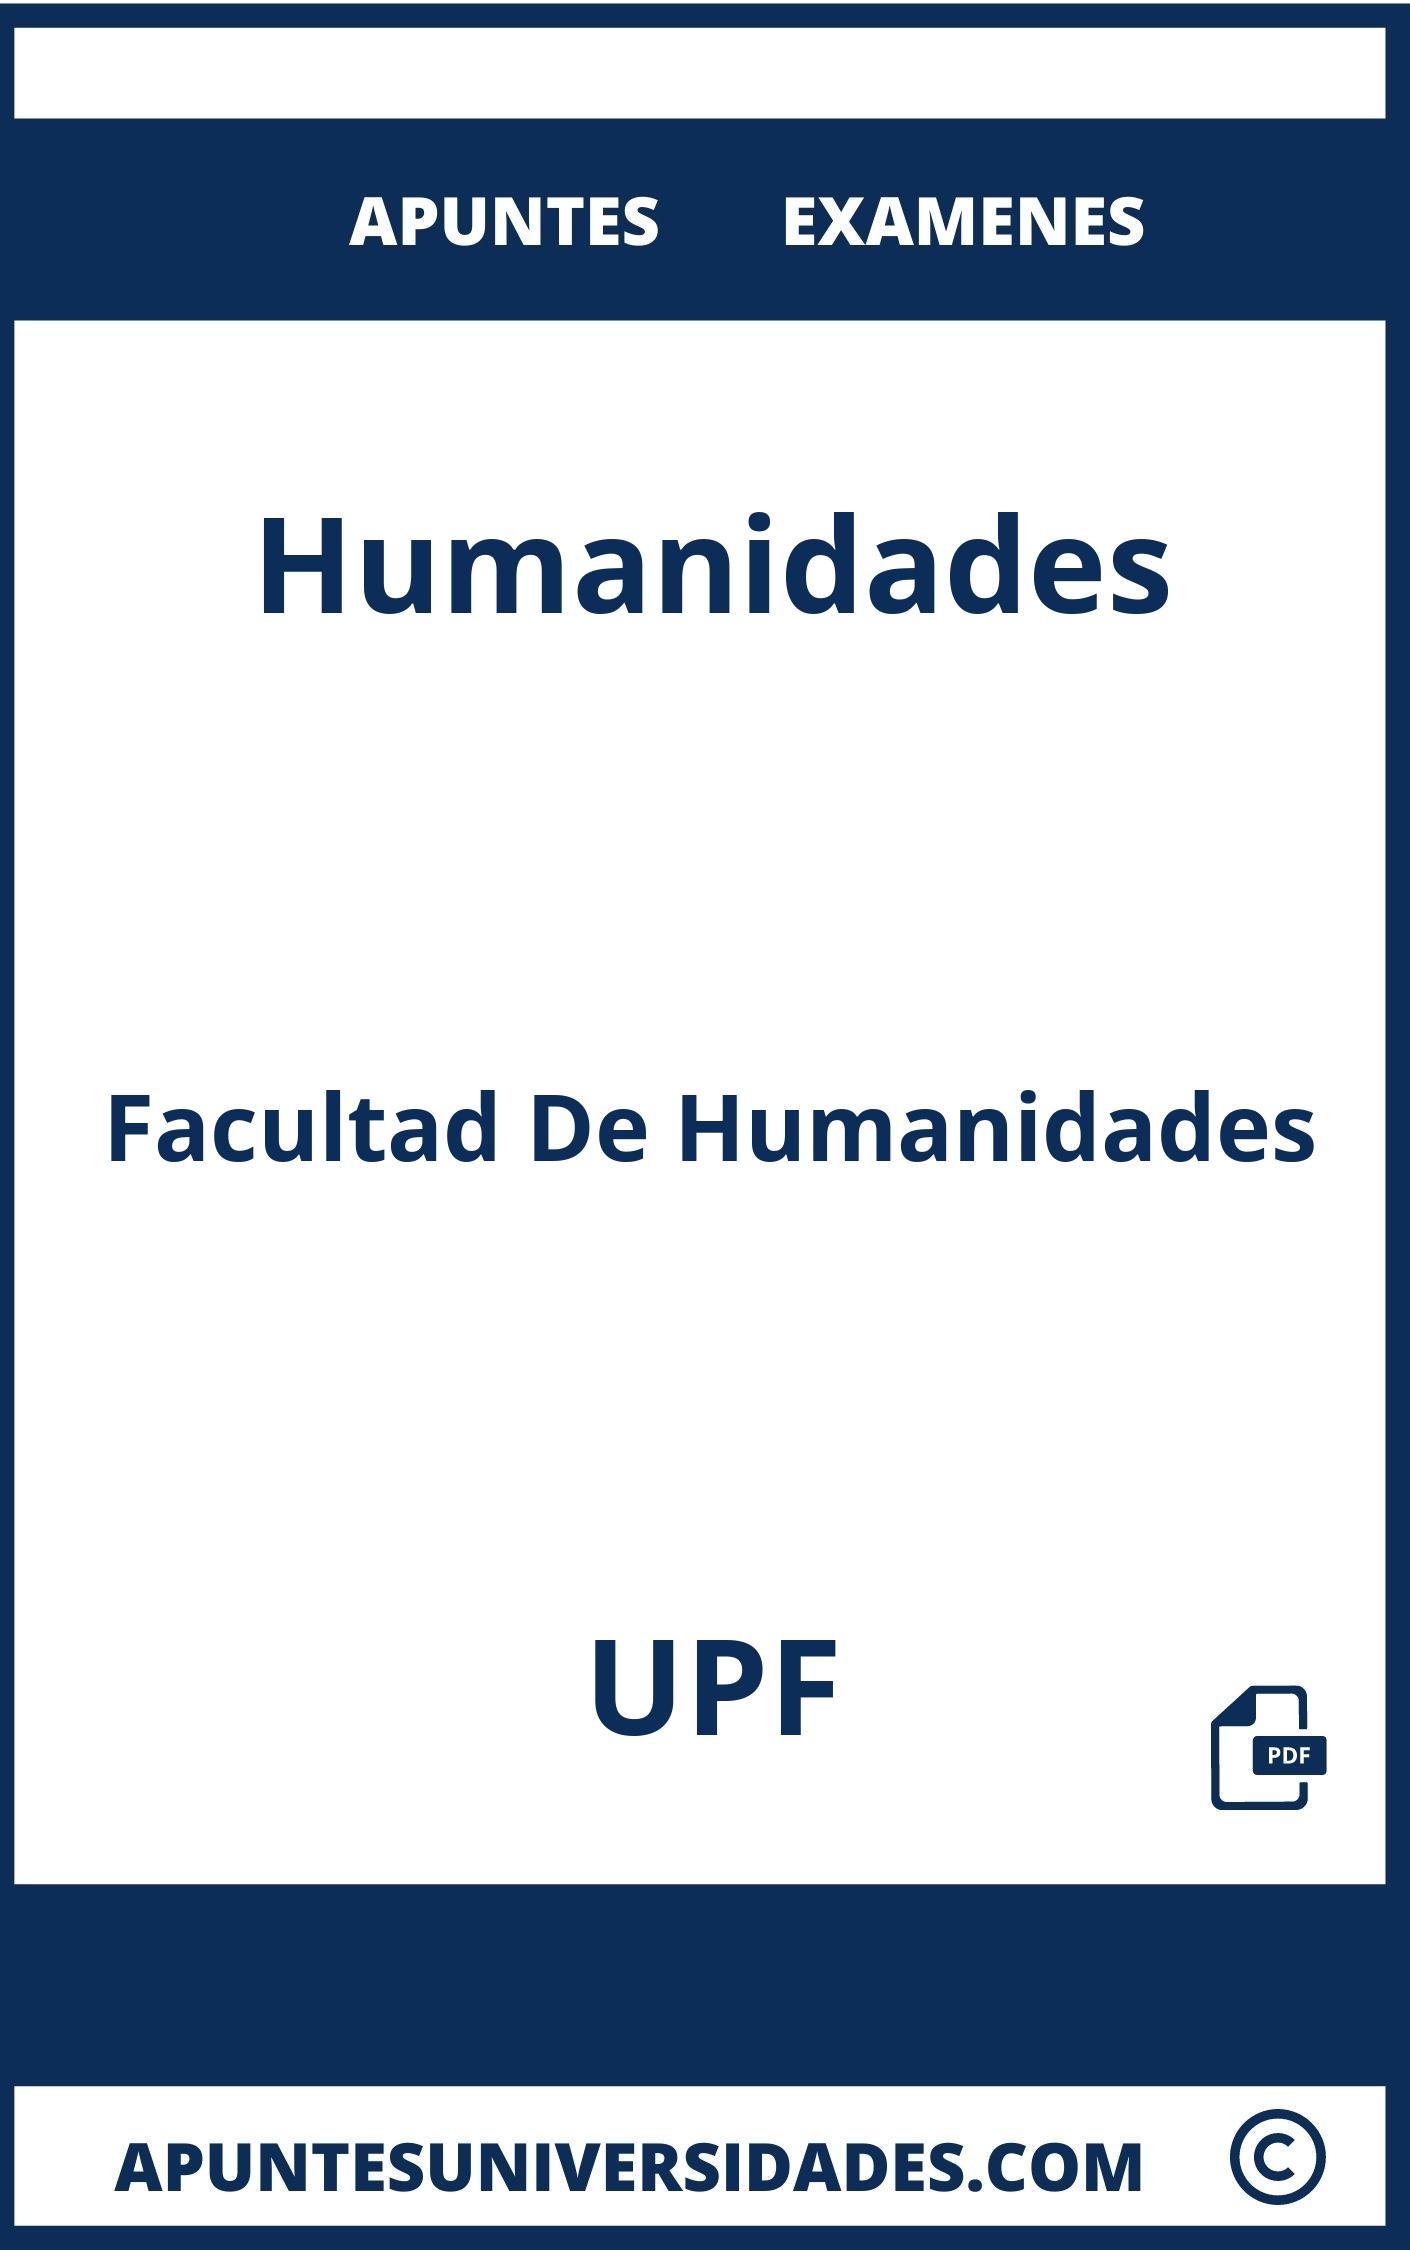 Apuntes Examenes Humanidades UPF